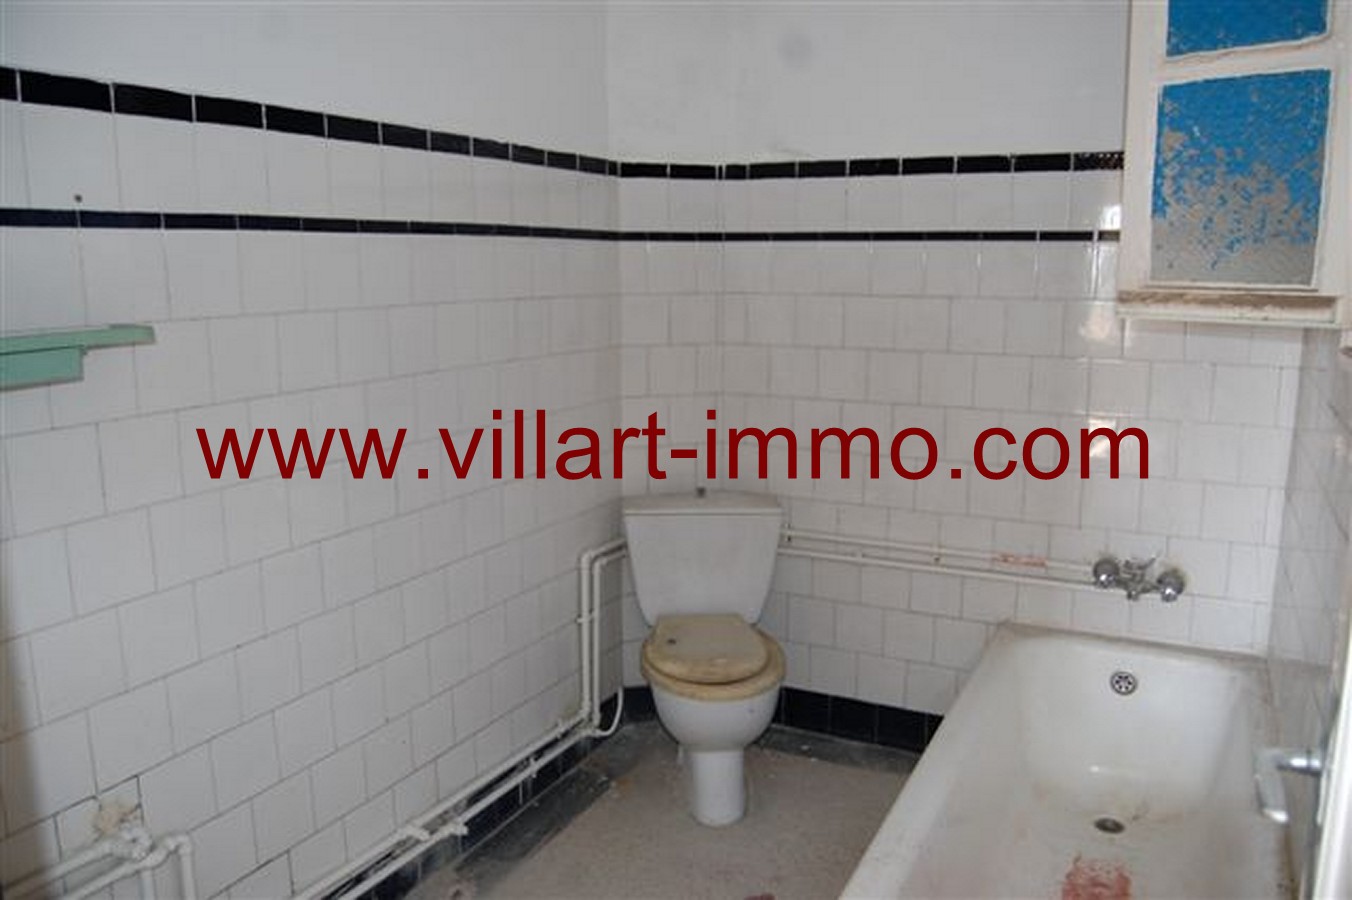 8-Vente-Appartement-Tanger-Salle de bain -VA532-Jirari-Villart Immo